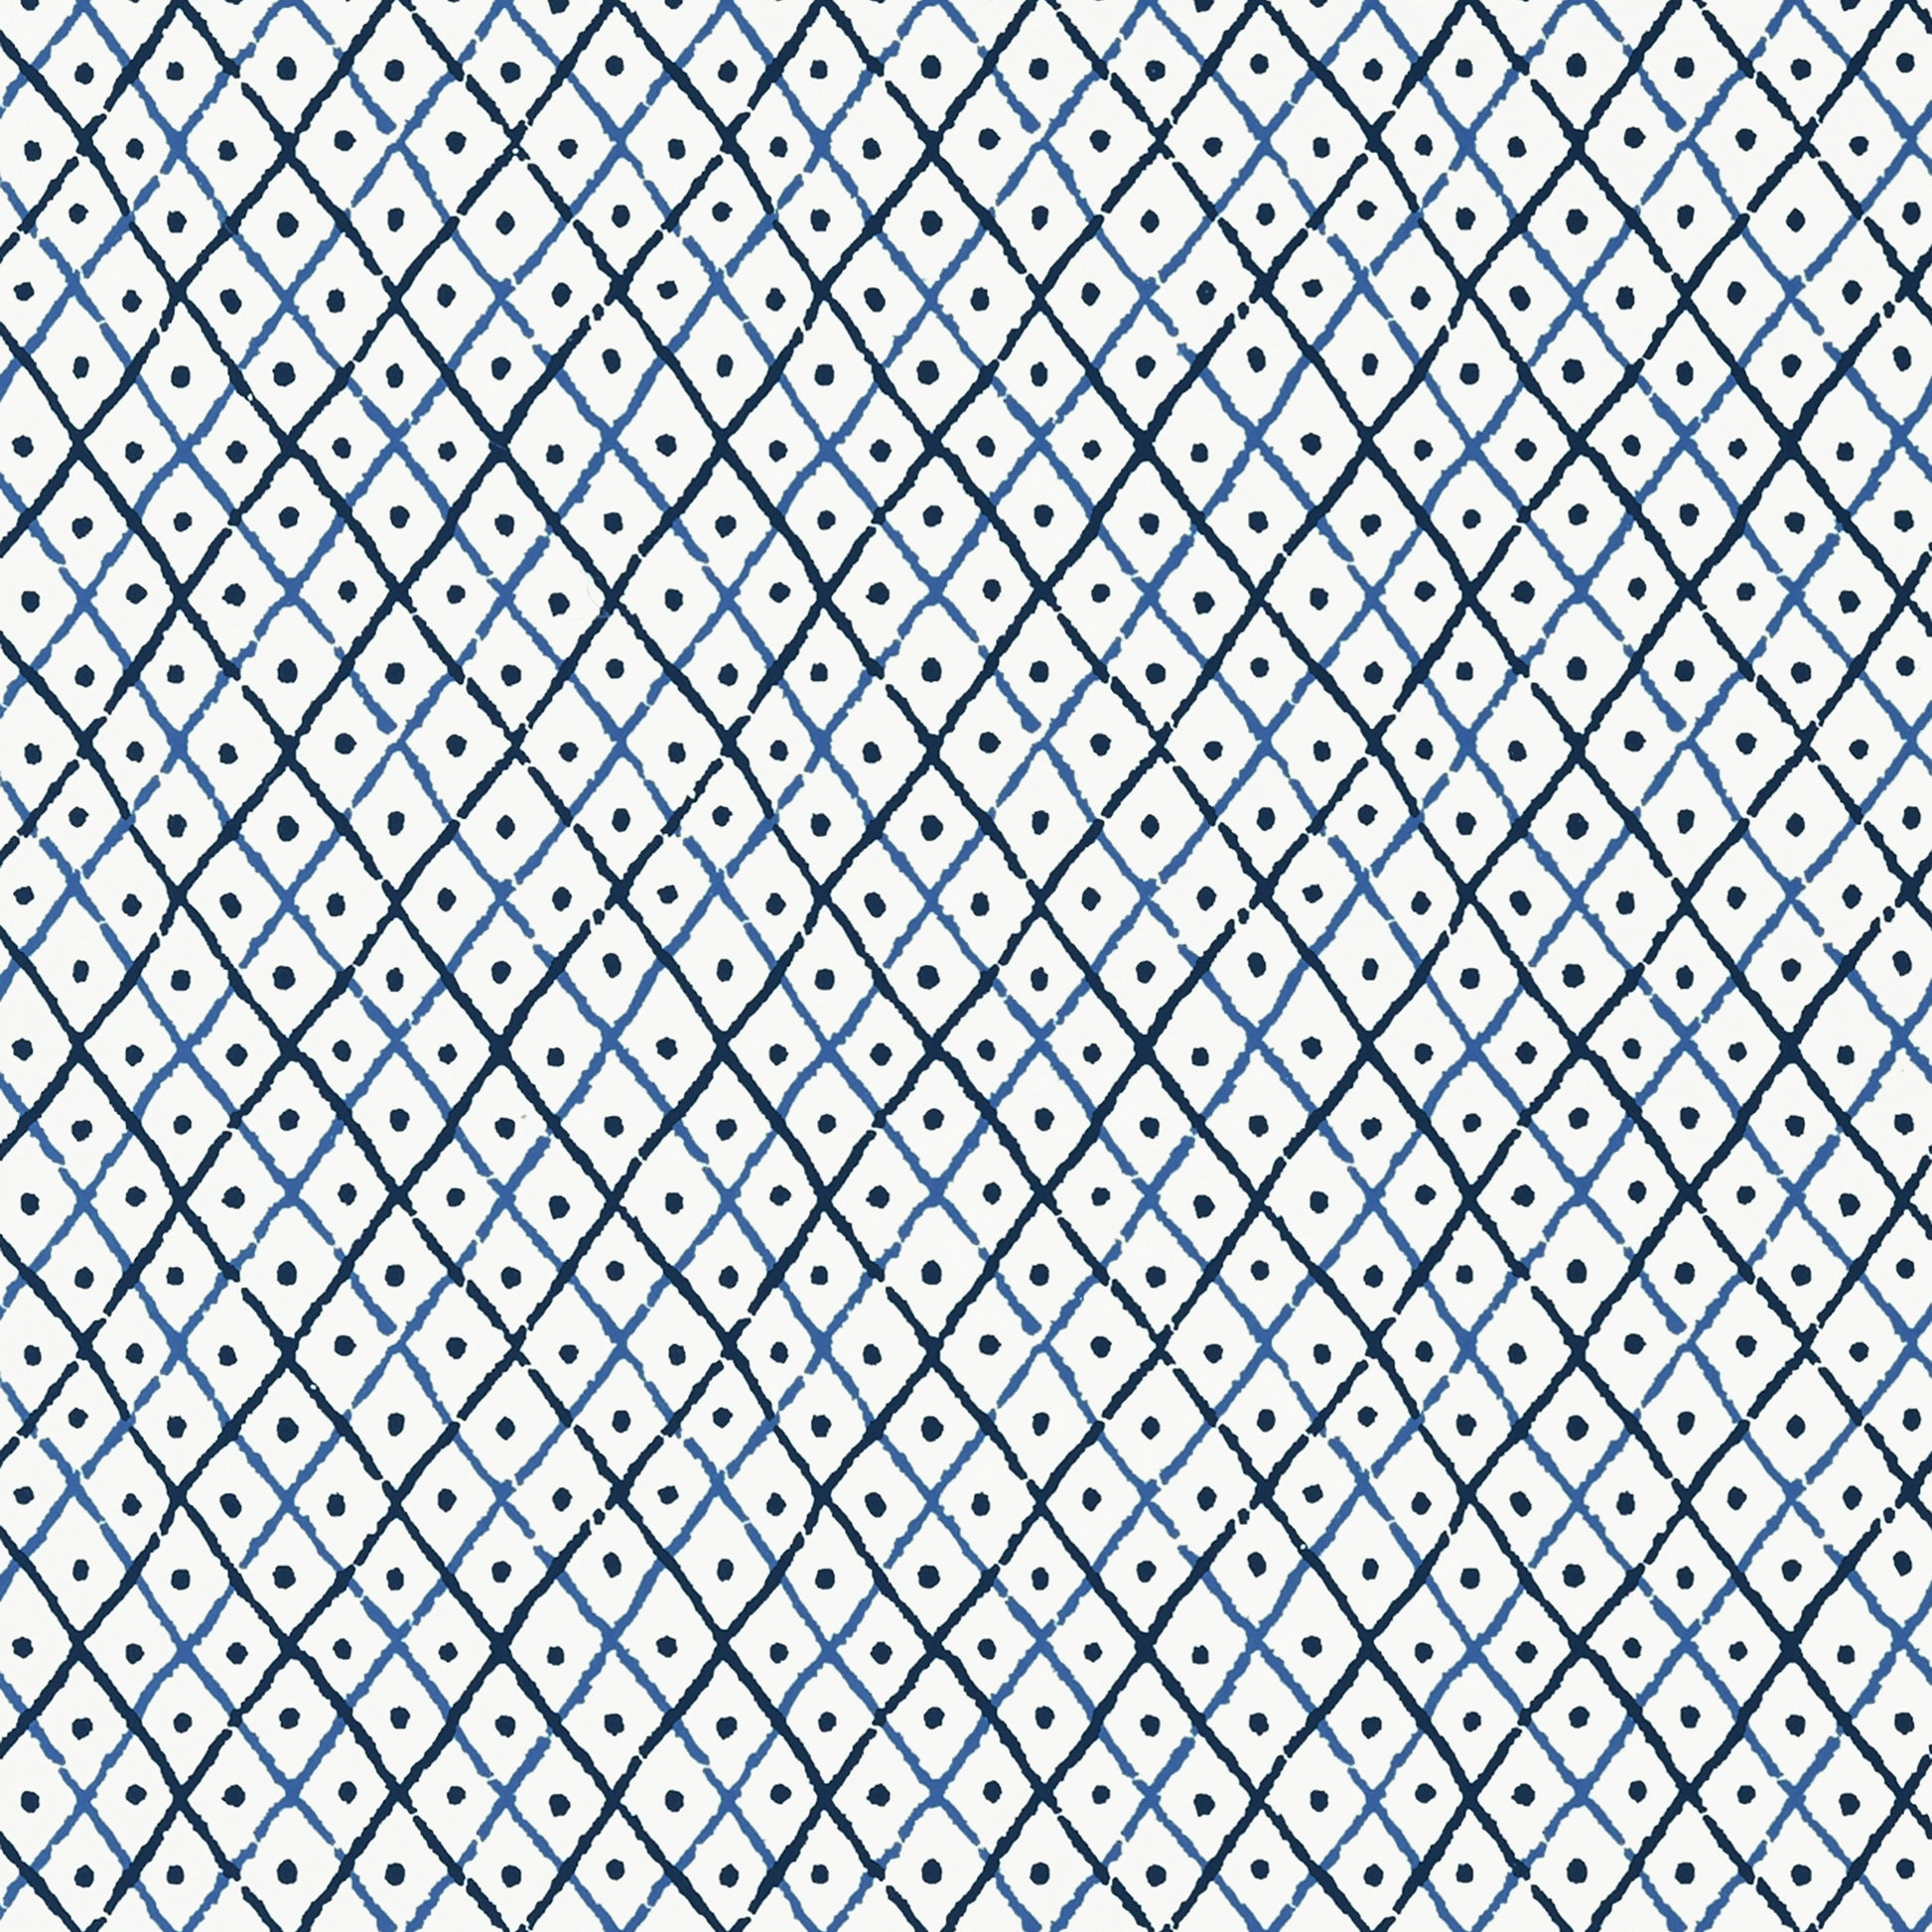 Purchase  Ann French Wallpaper Item# AT78750 pattern name  Mini Trellis